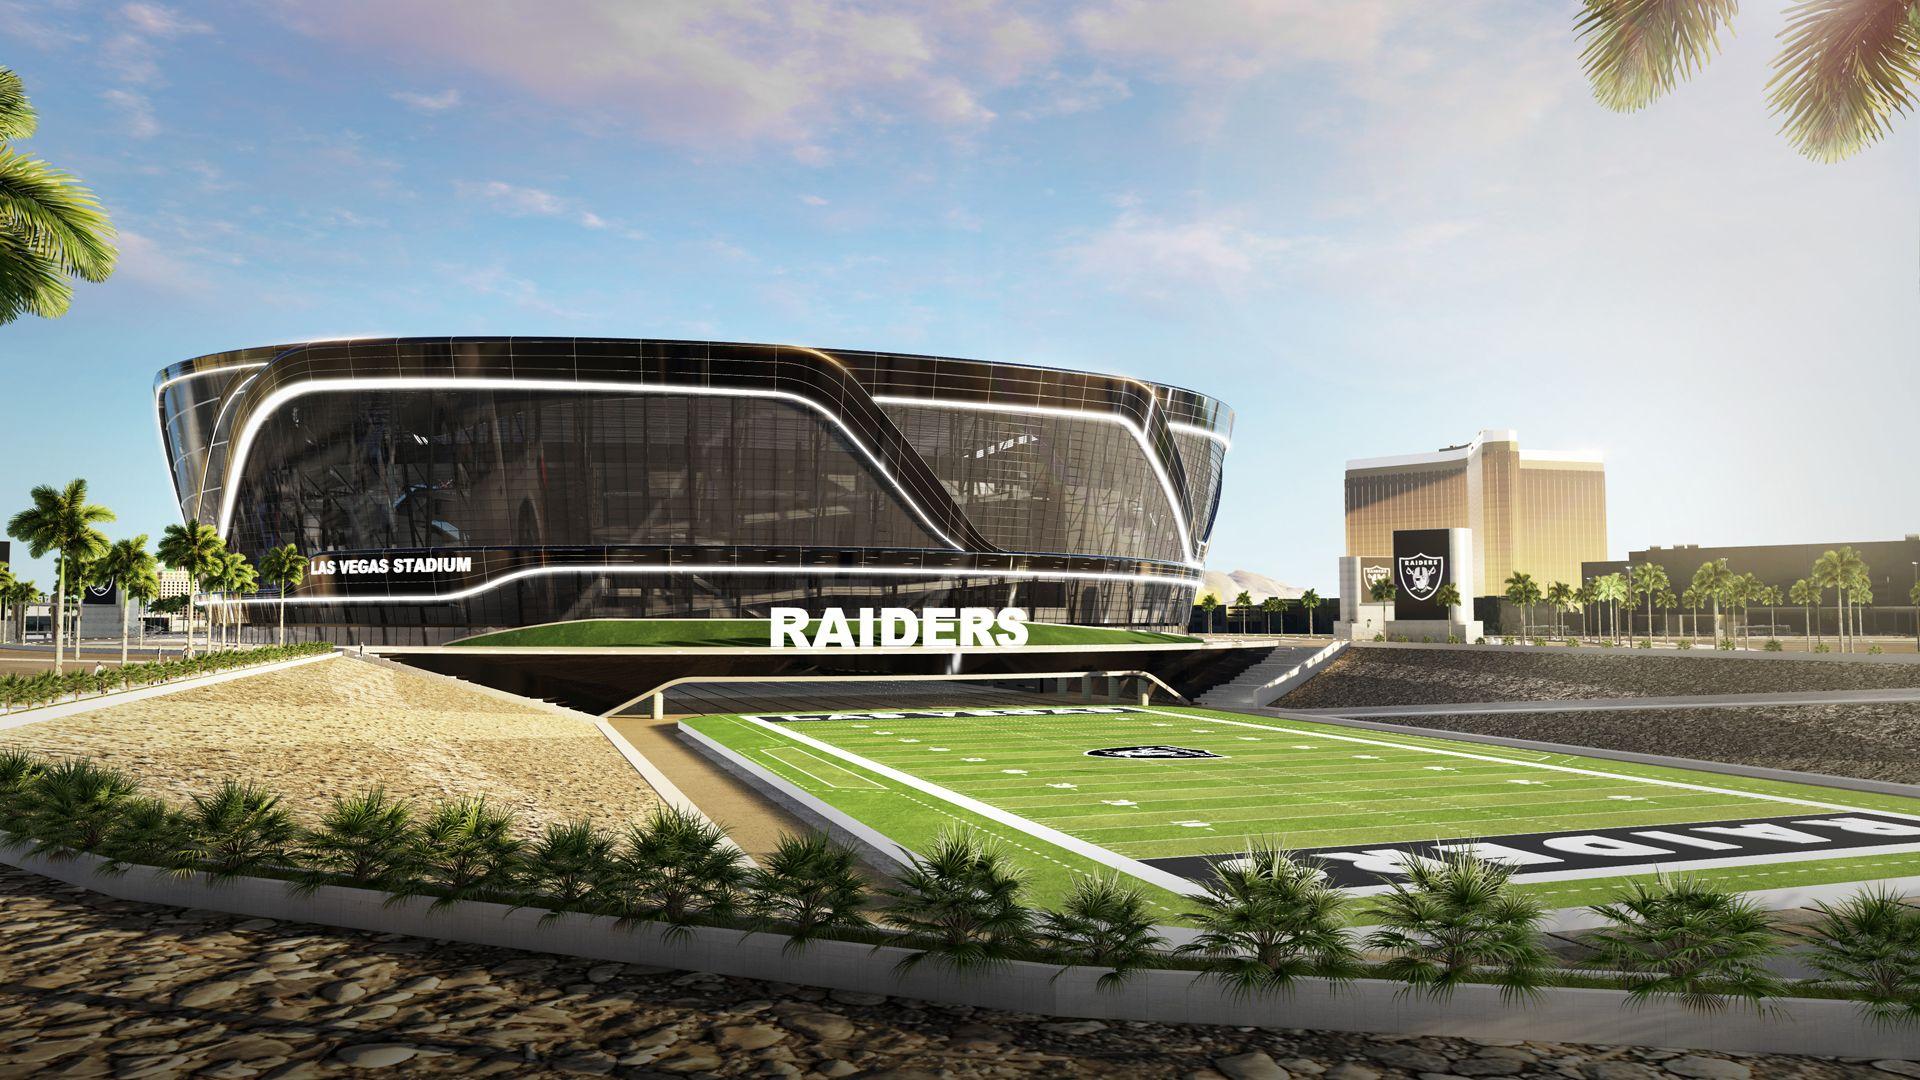 Las Vegas Raiders: Image of Their Stunning $2 Billion Stadium